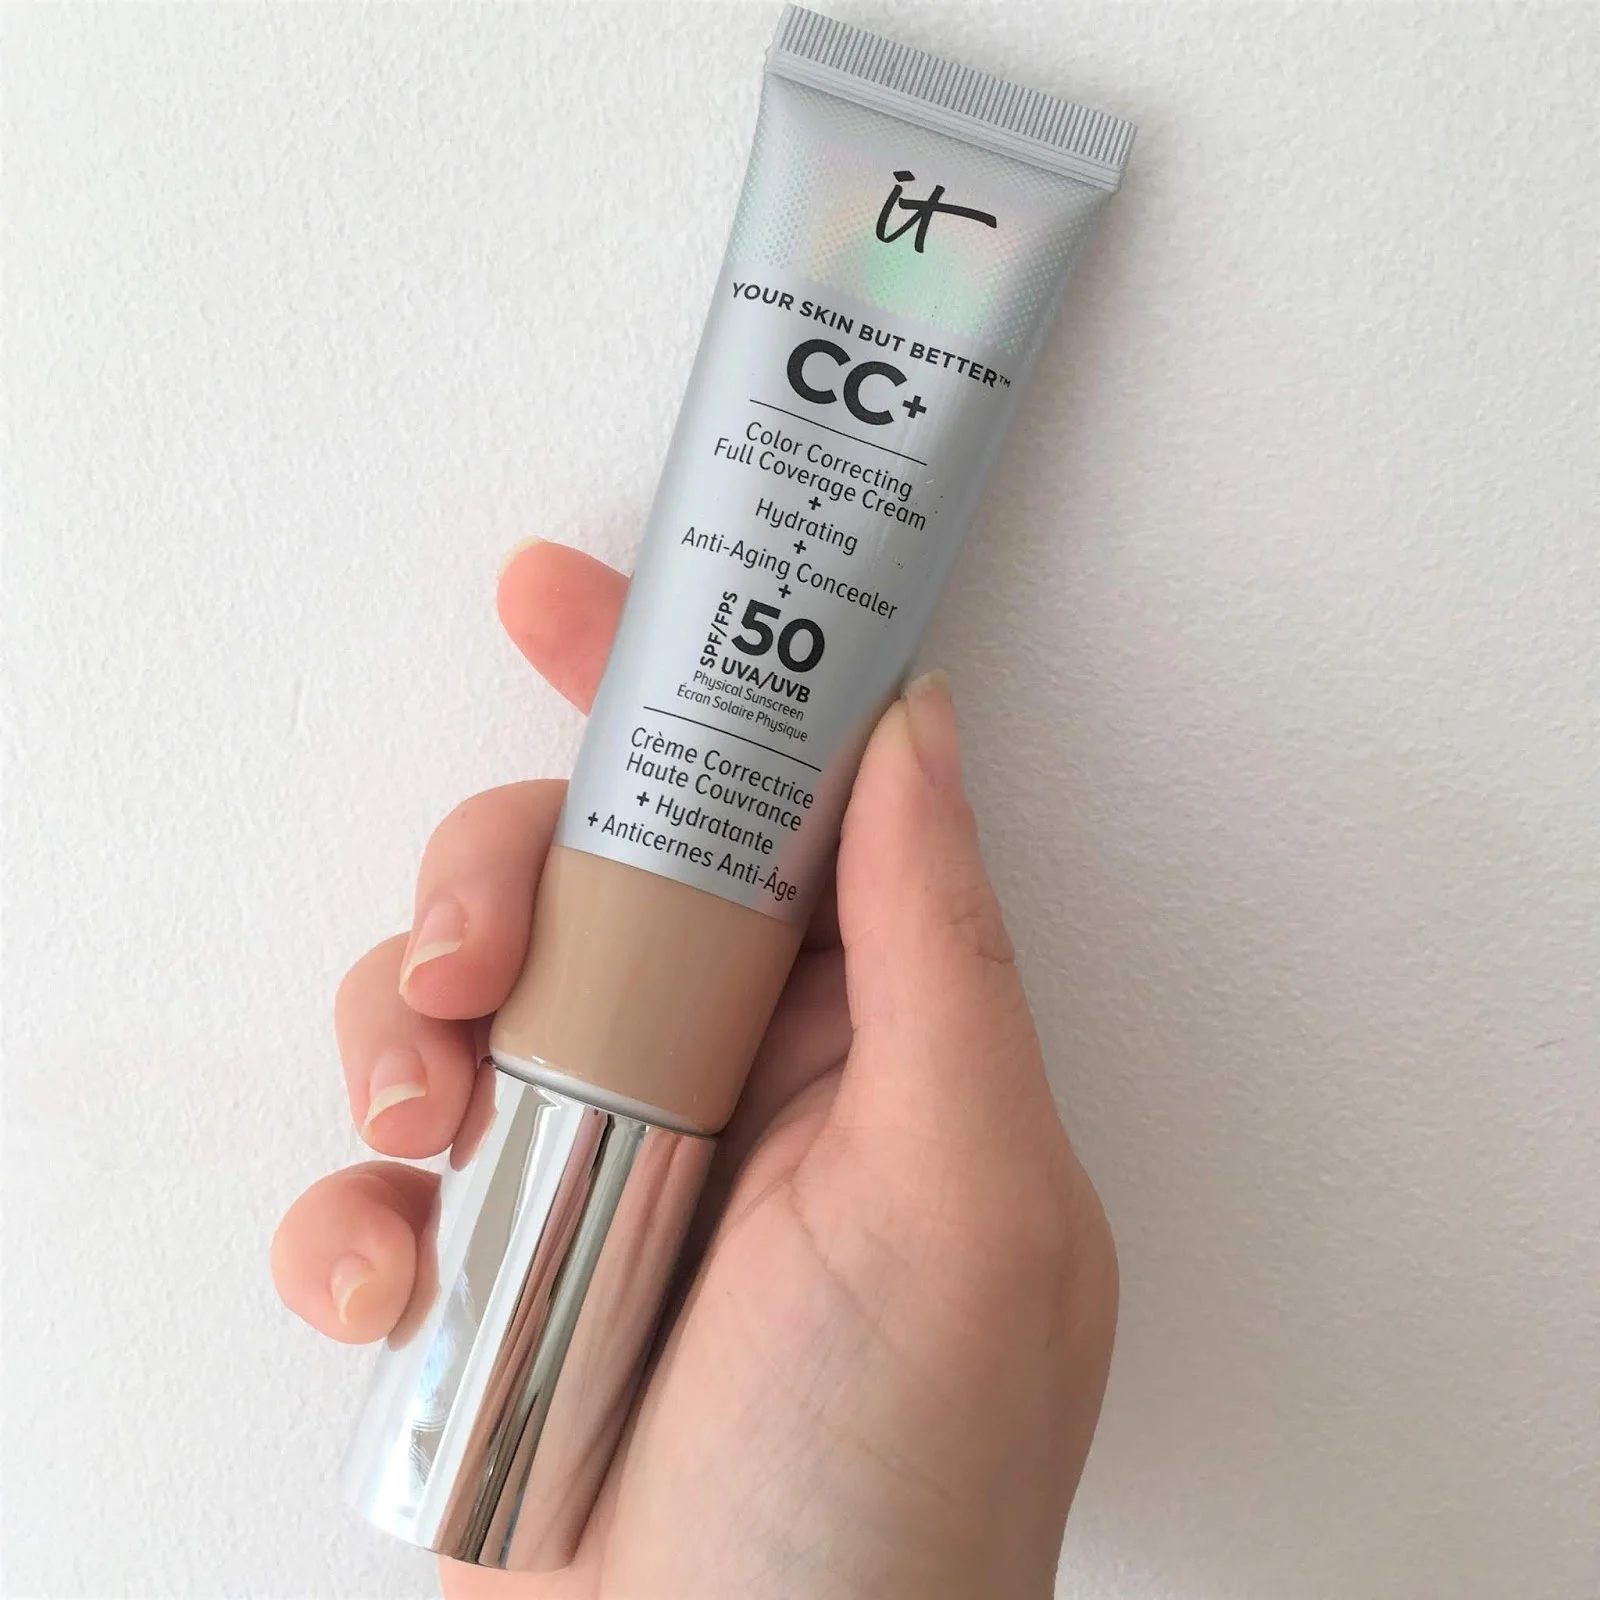 Cosmetics Face Concealer CC+ Cream SPF50 Full Cover Medium Light Base Liquid Foundation Makeup Whitening Your Skin But Better